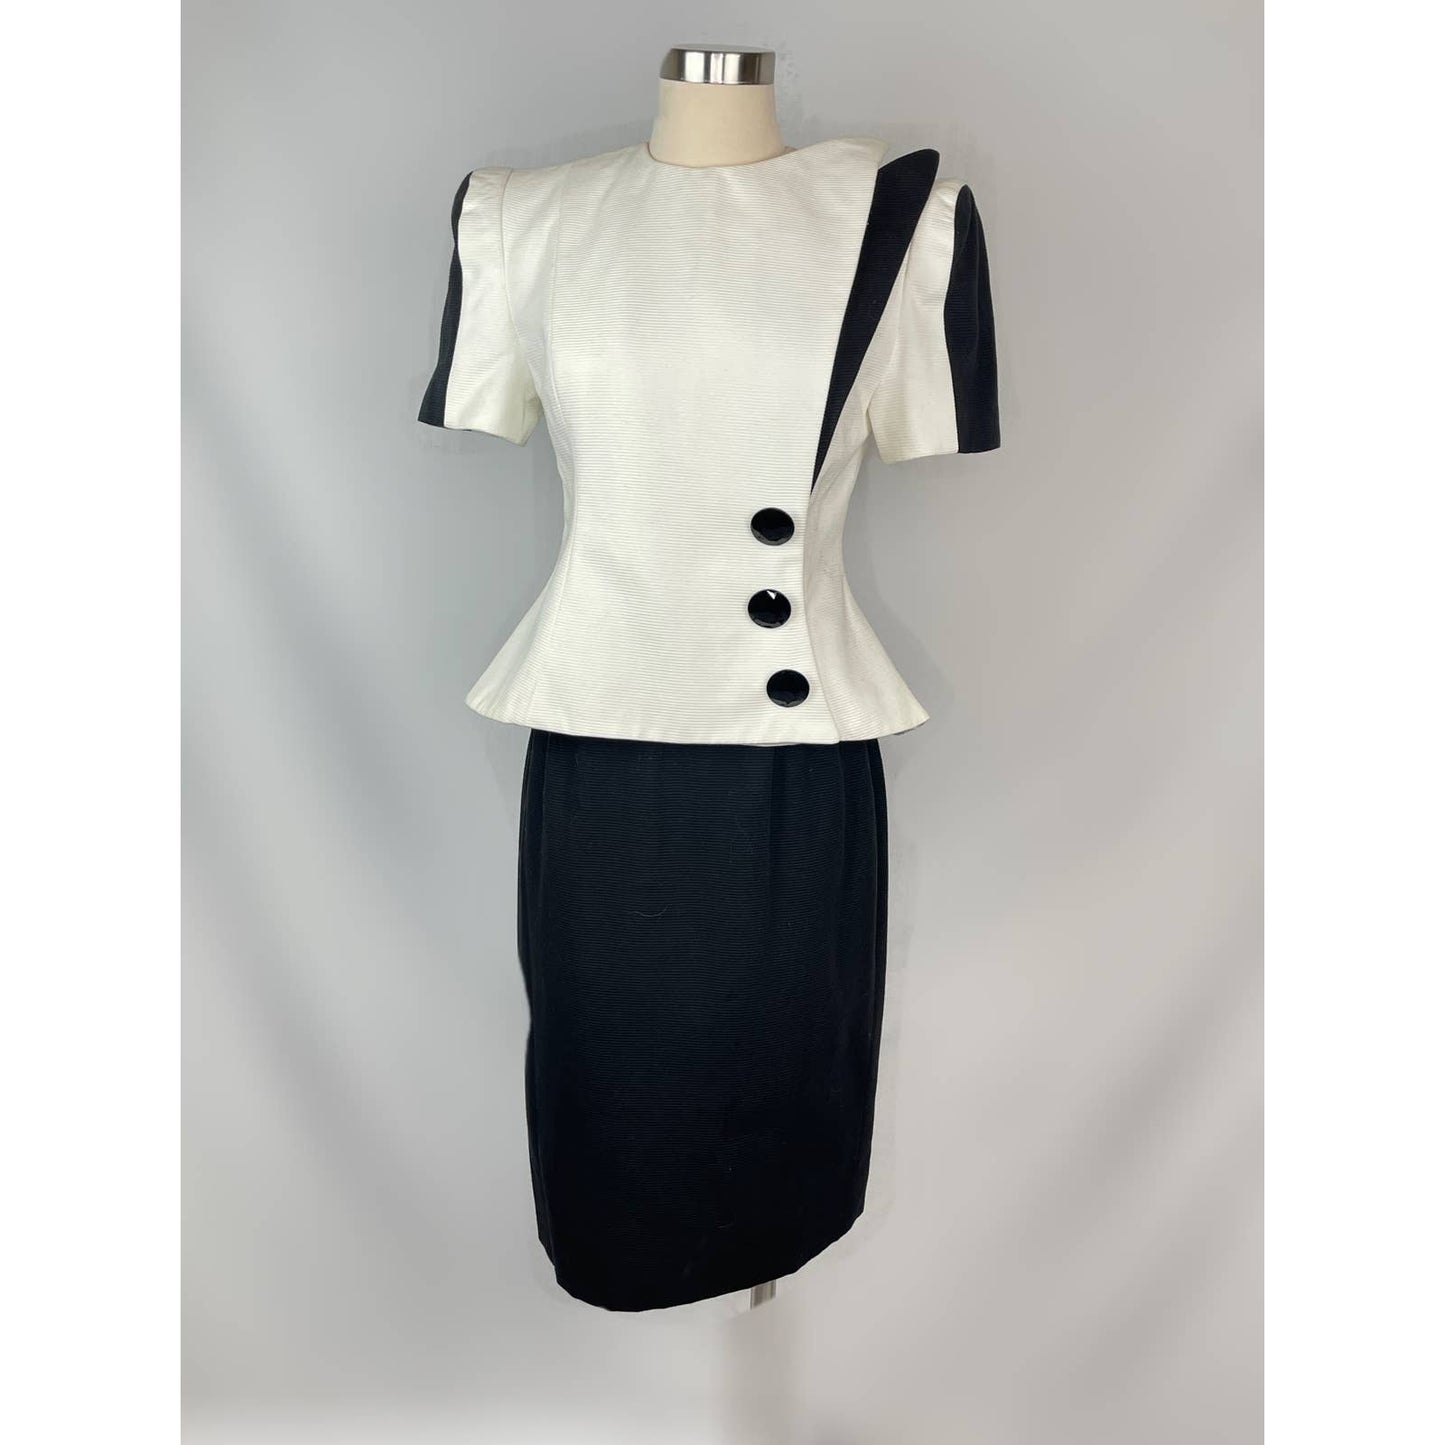 Vintage 1980s Skirt Suit Black White Short Sleeved Raul Blanco Peplum Cruella